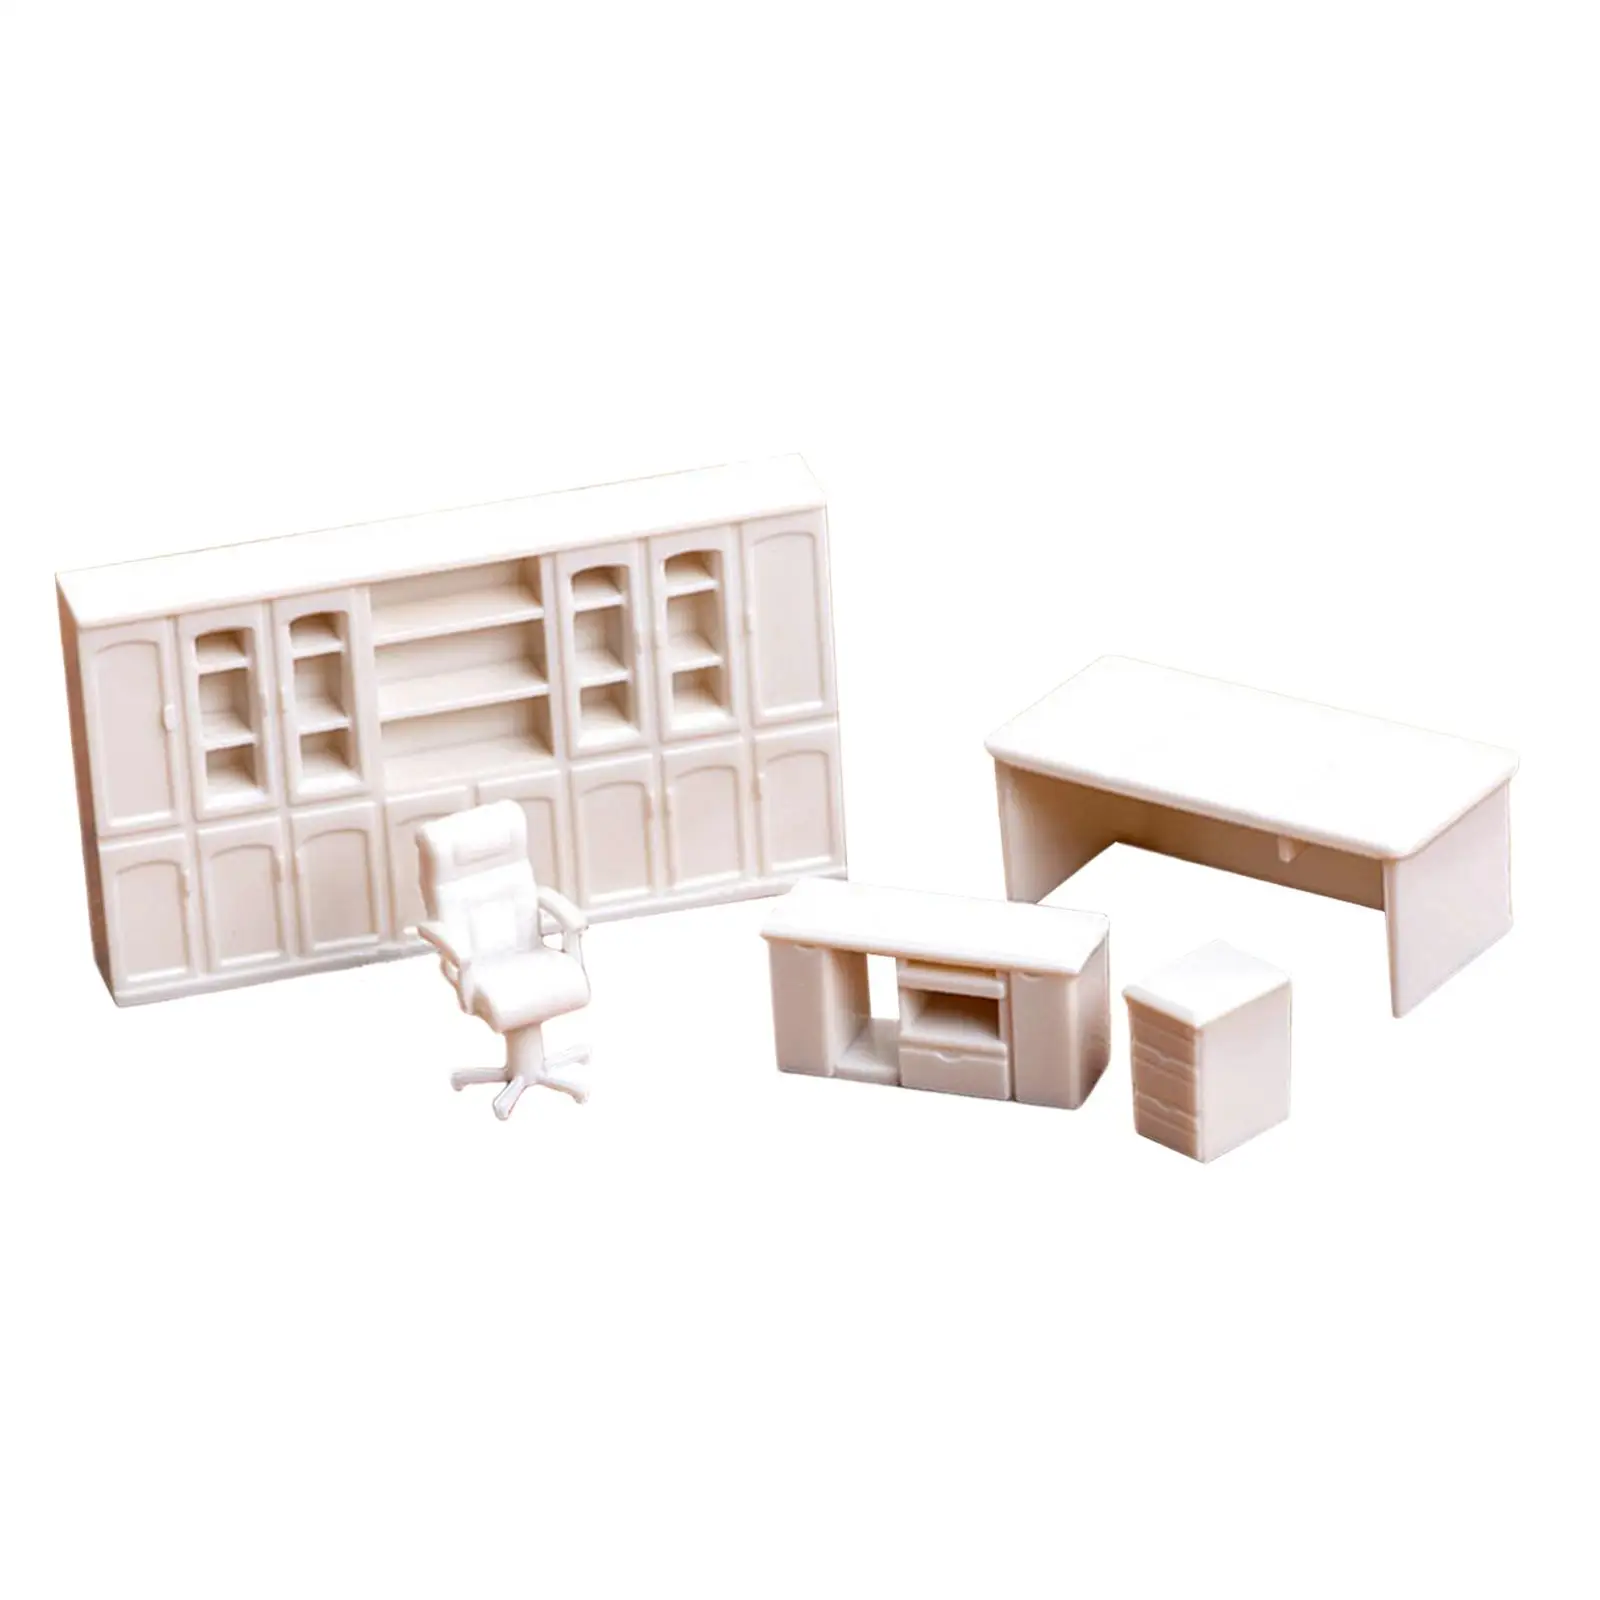 Mini Furniture Model Resin 1/50 Scale Furniture Model 1:50 Scale Miniature Furniture for Sand Table Decoration Photography Props